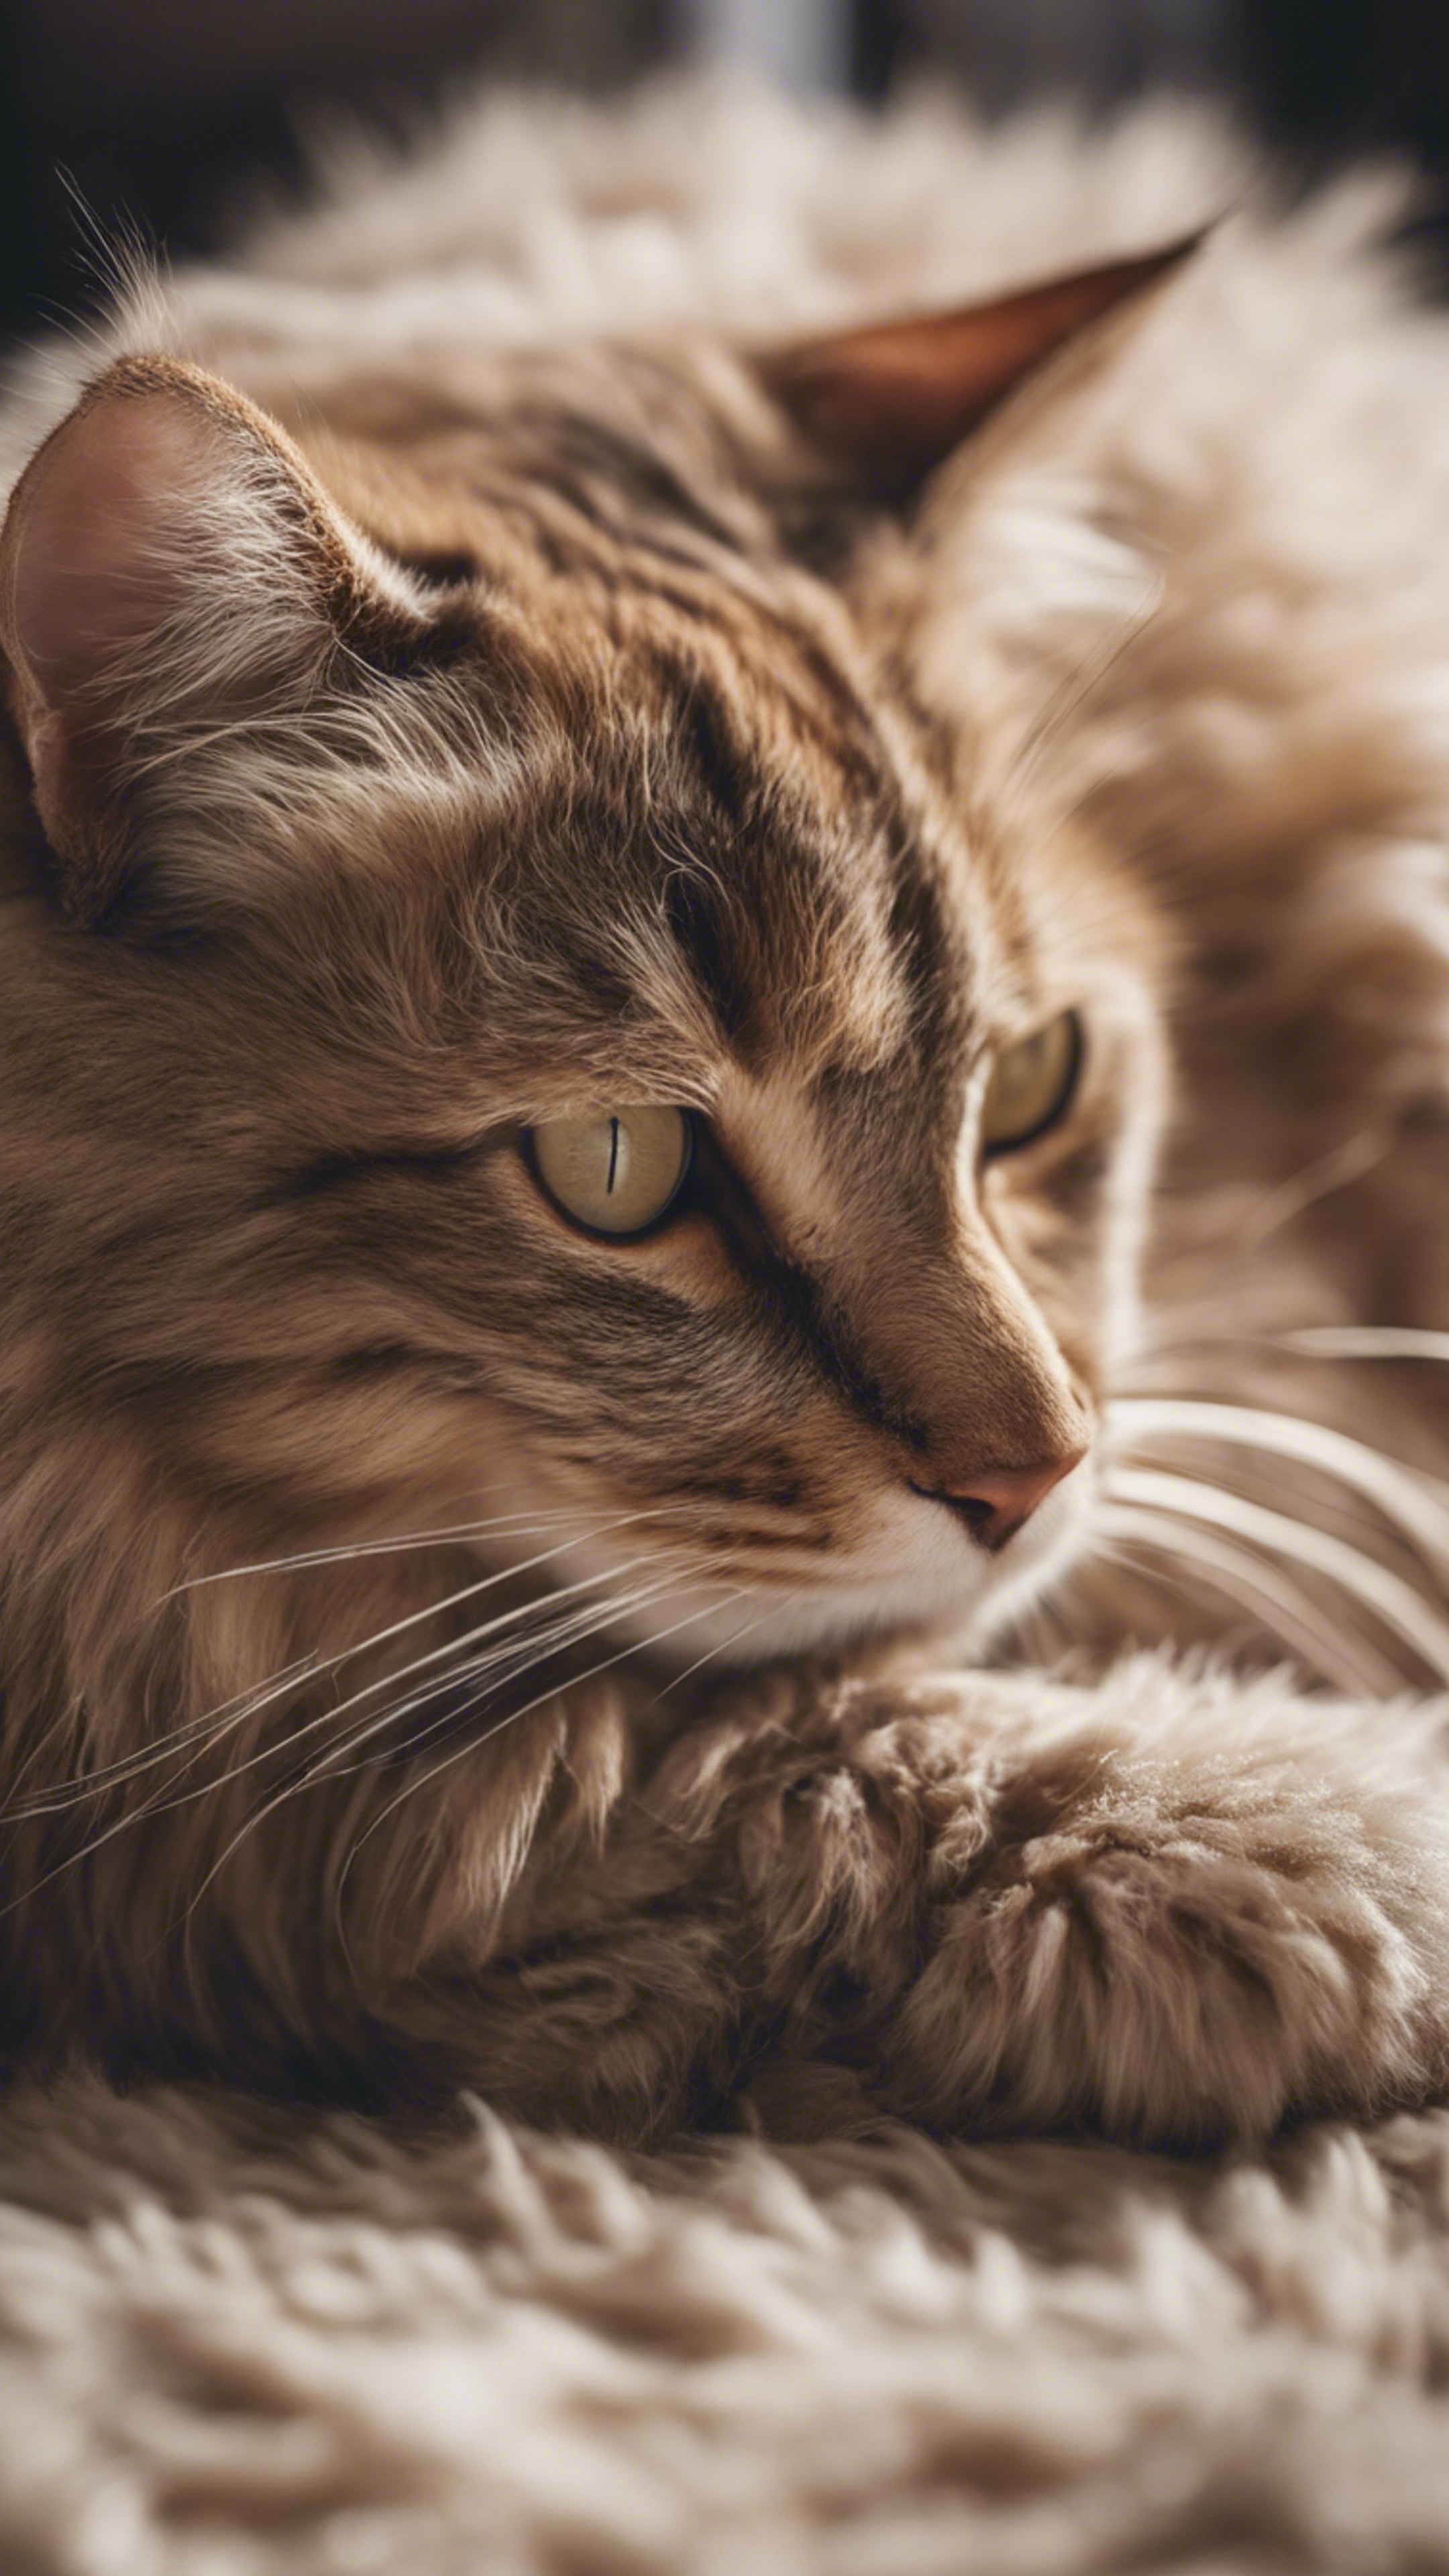 A lazing cat with cool beige fur, curling up on a shaggy rug. Divar kağızı[5dc2da6099d74770bd36]